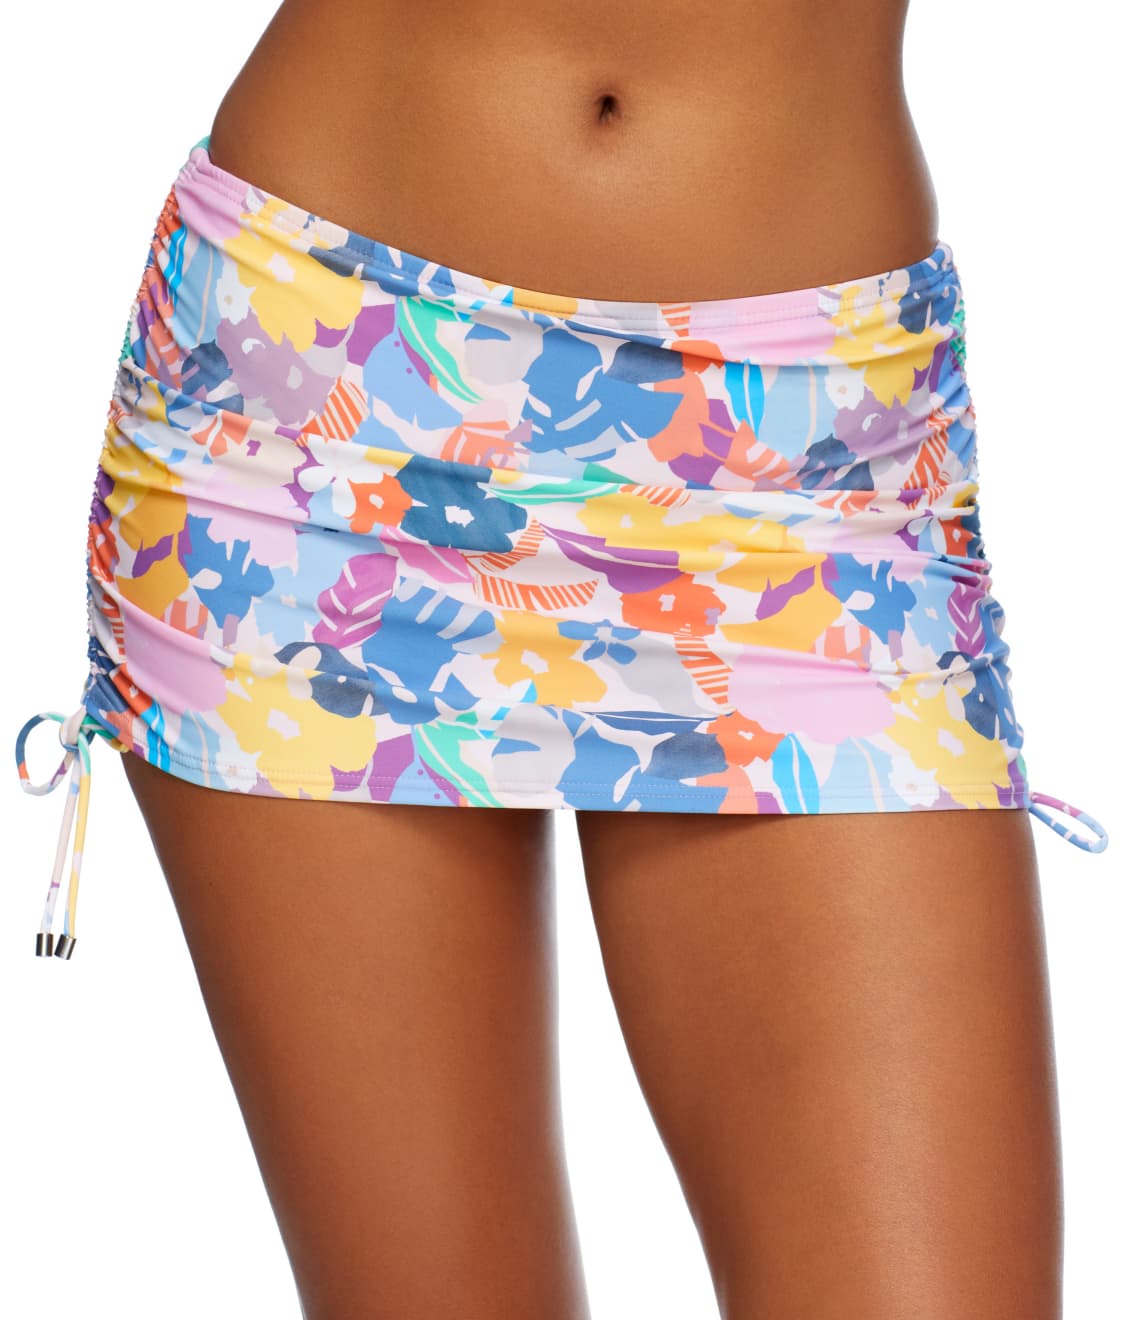 Birdsong: Miami Vice Skirted Bikini Bottom S20156-MIAVI